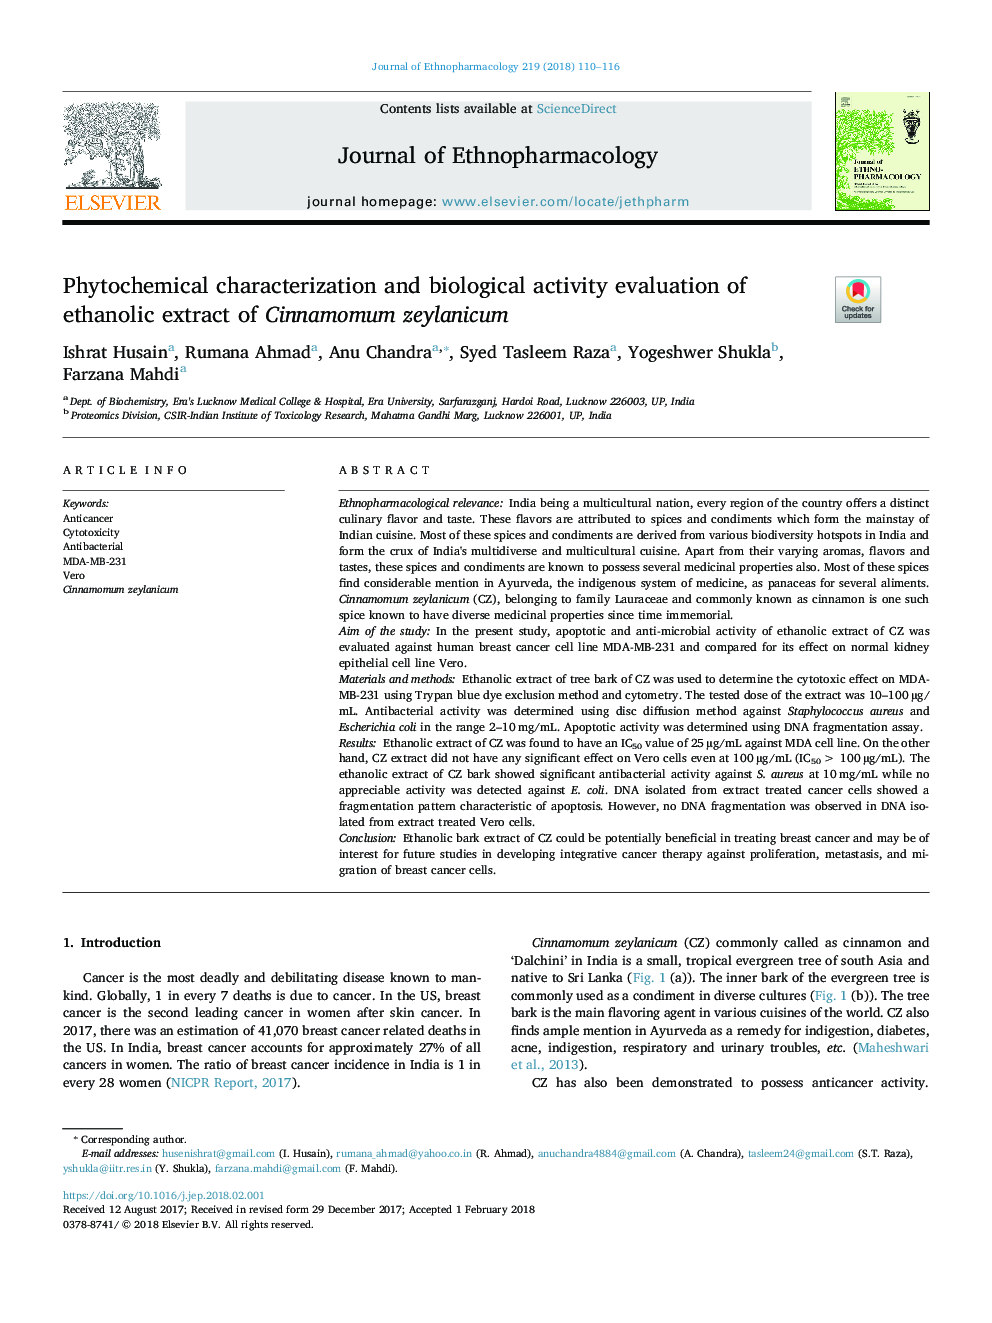 Phytochemical characterization and biological activity evaluation of ethanolic extract of Cinnamomum zeylanicum